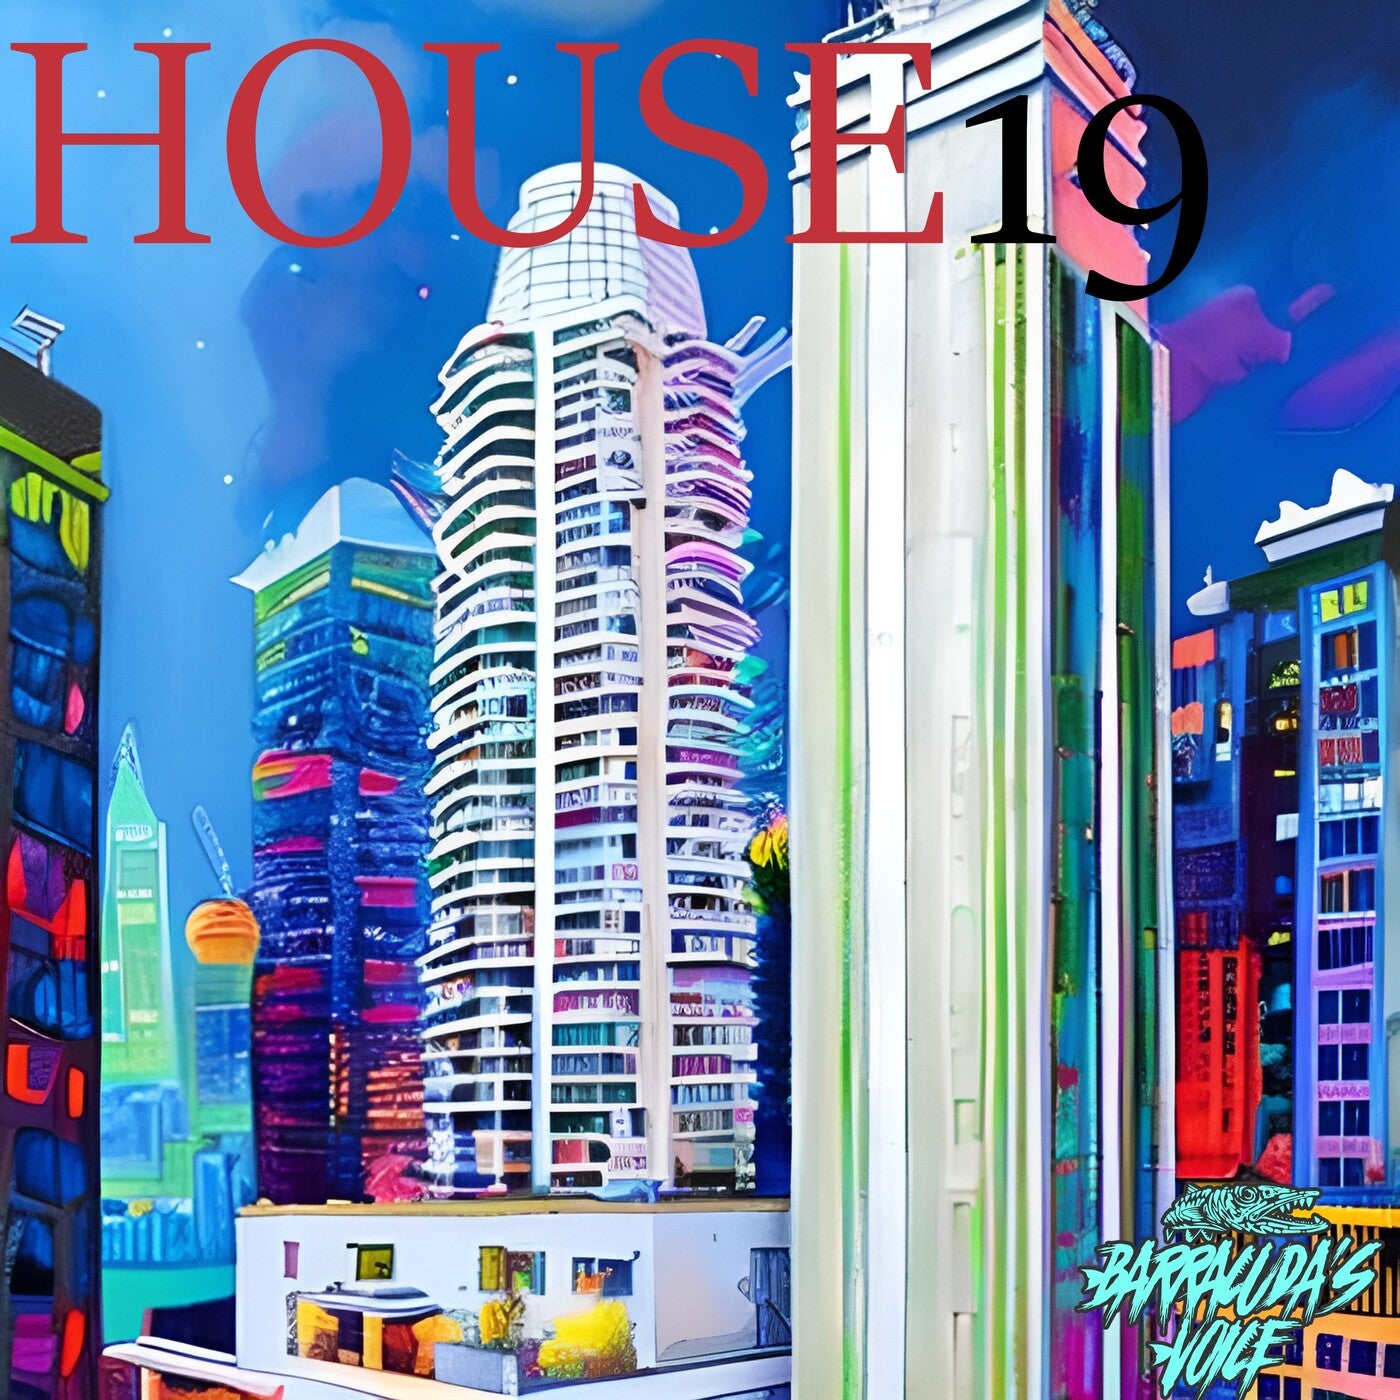 House19